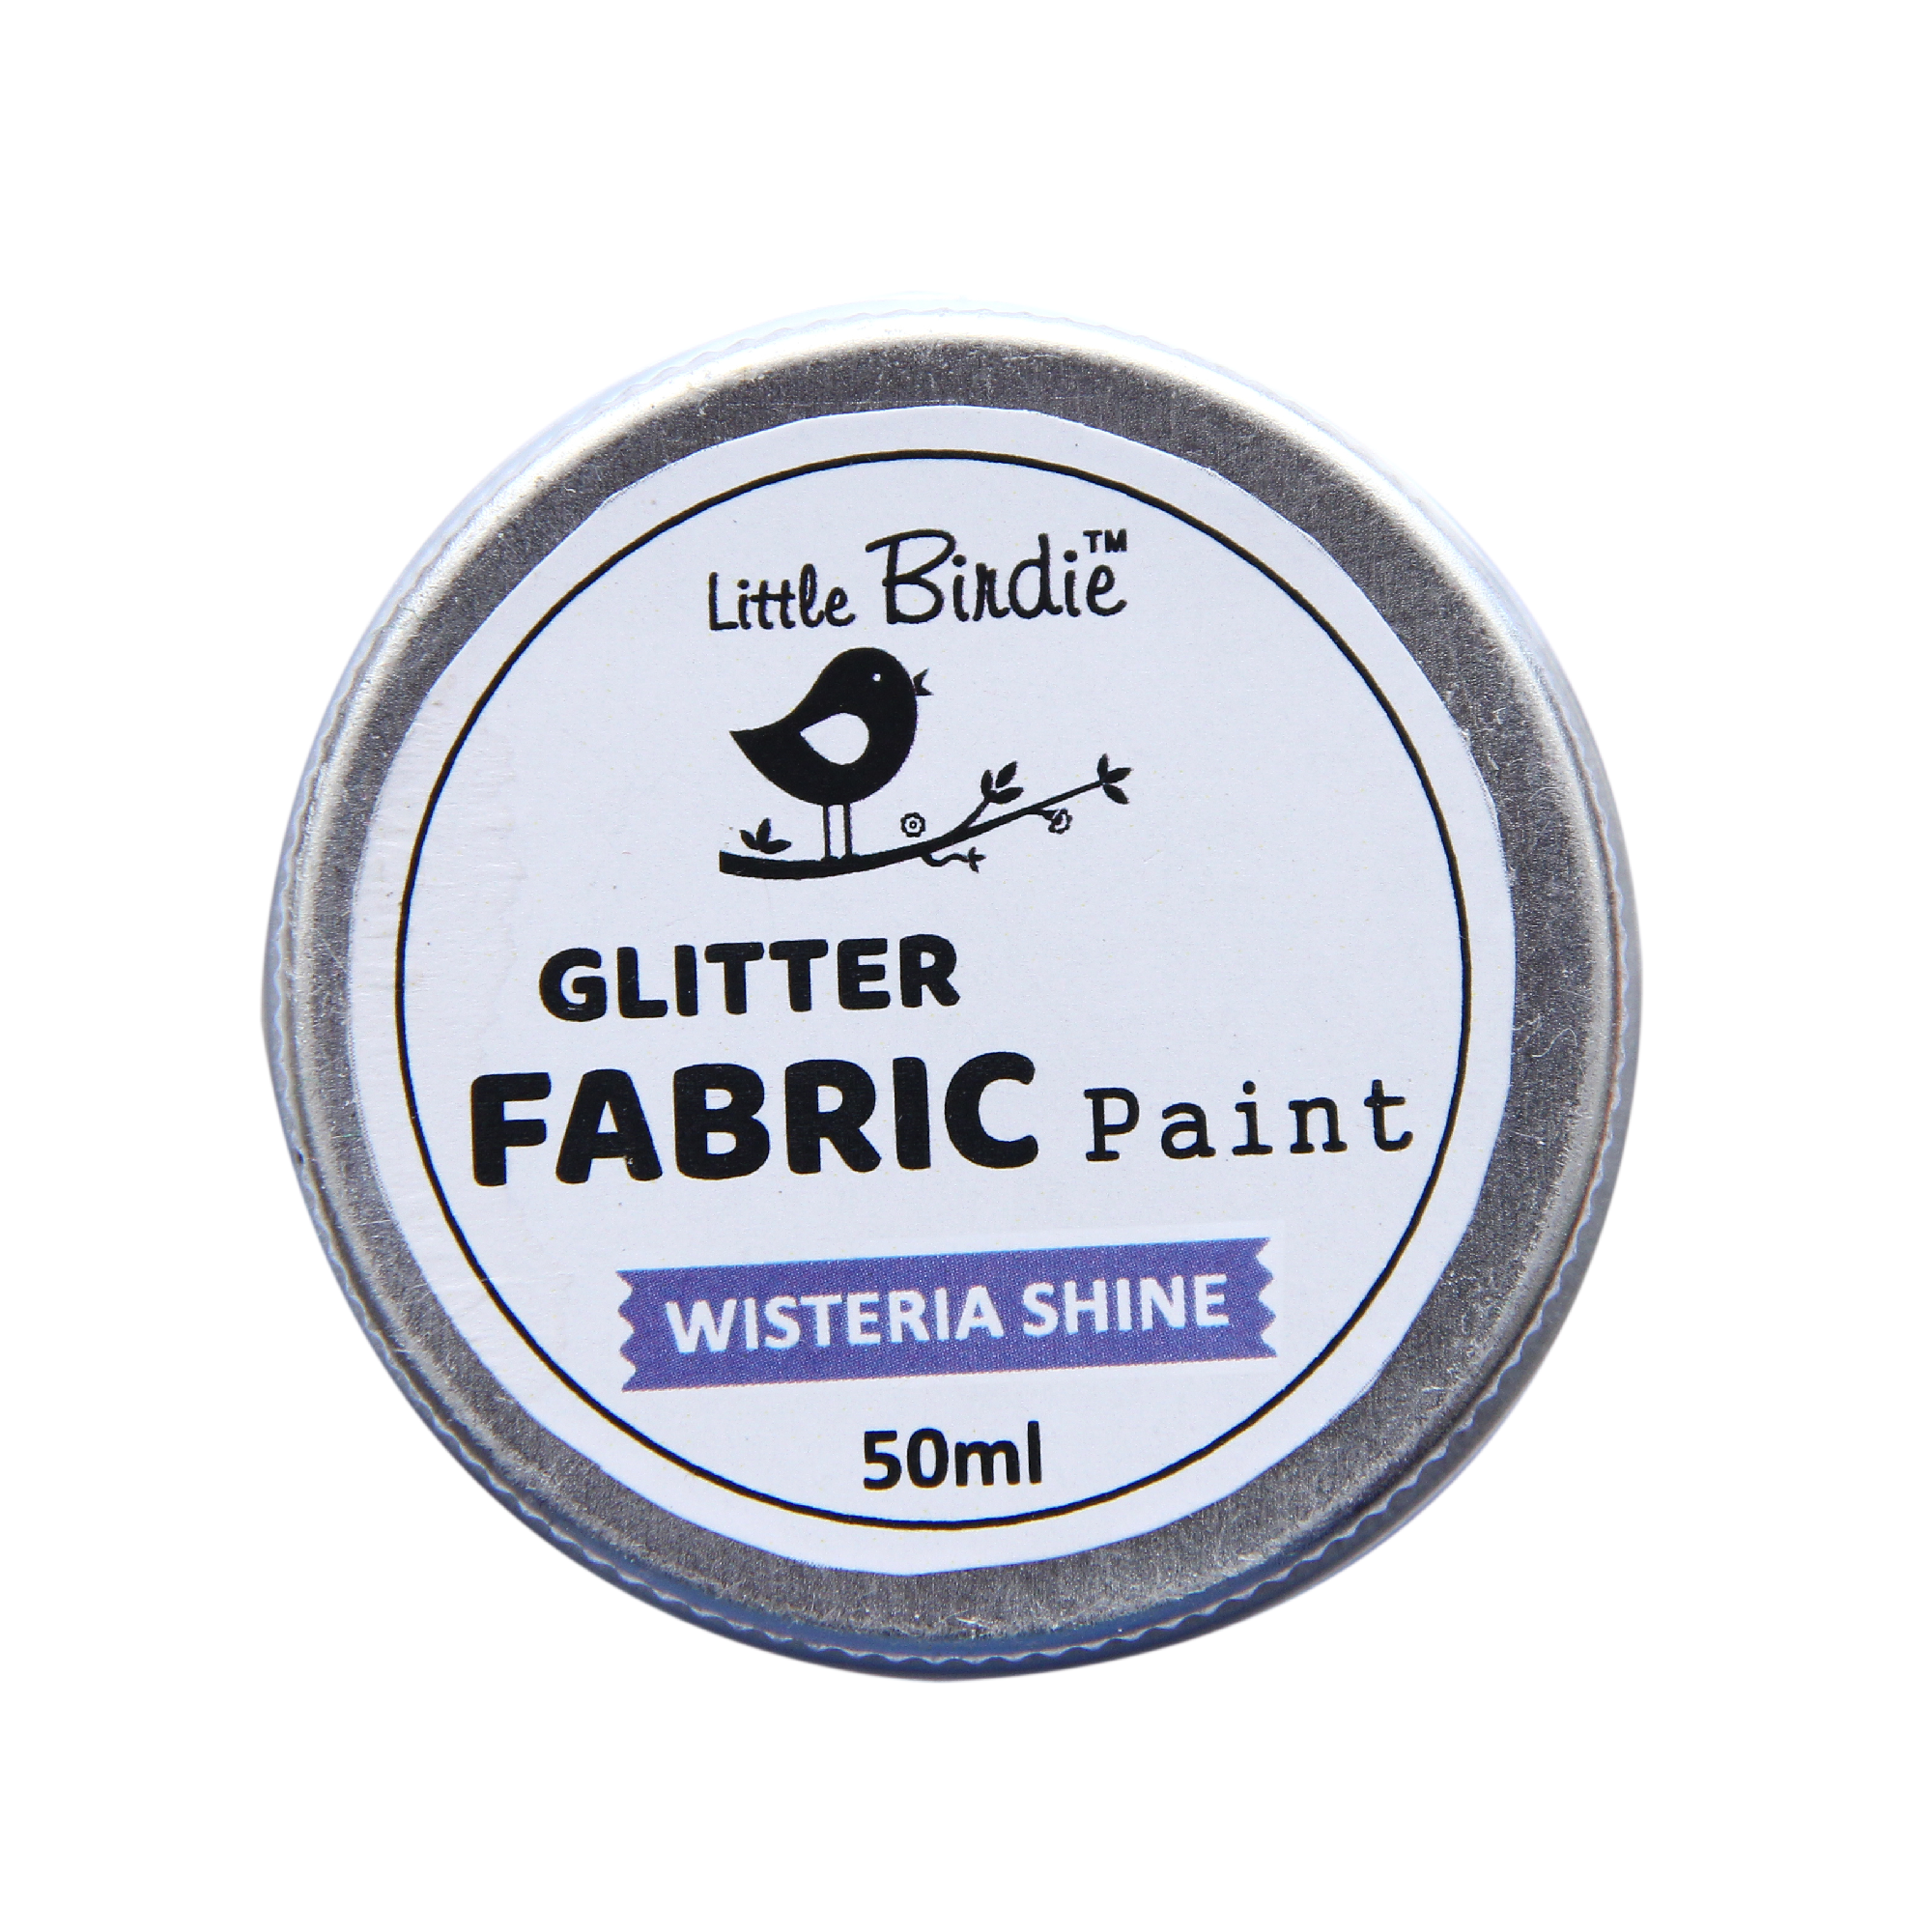 Little Birdie Glitter Fabric Paint - Wisteria Shine 50ml, 1pc